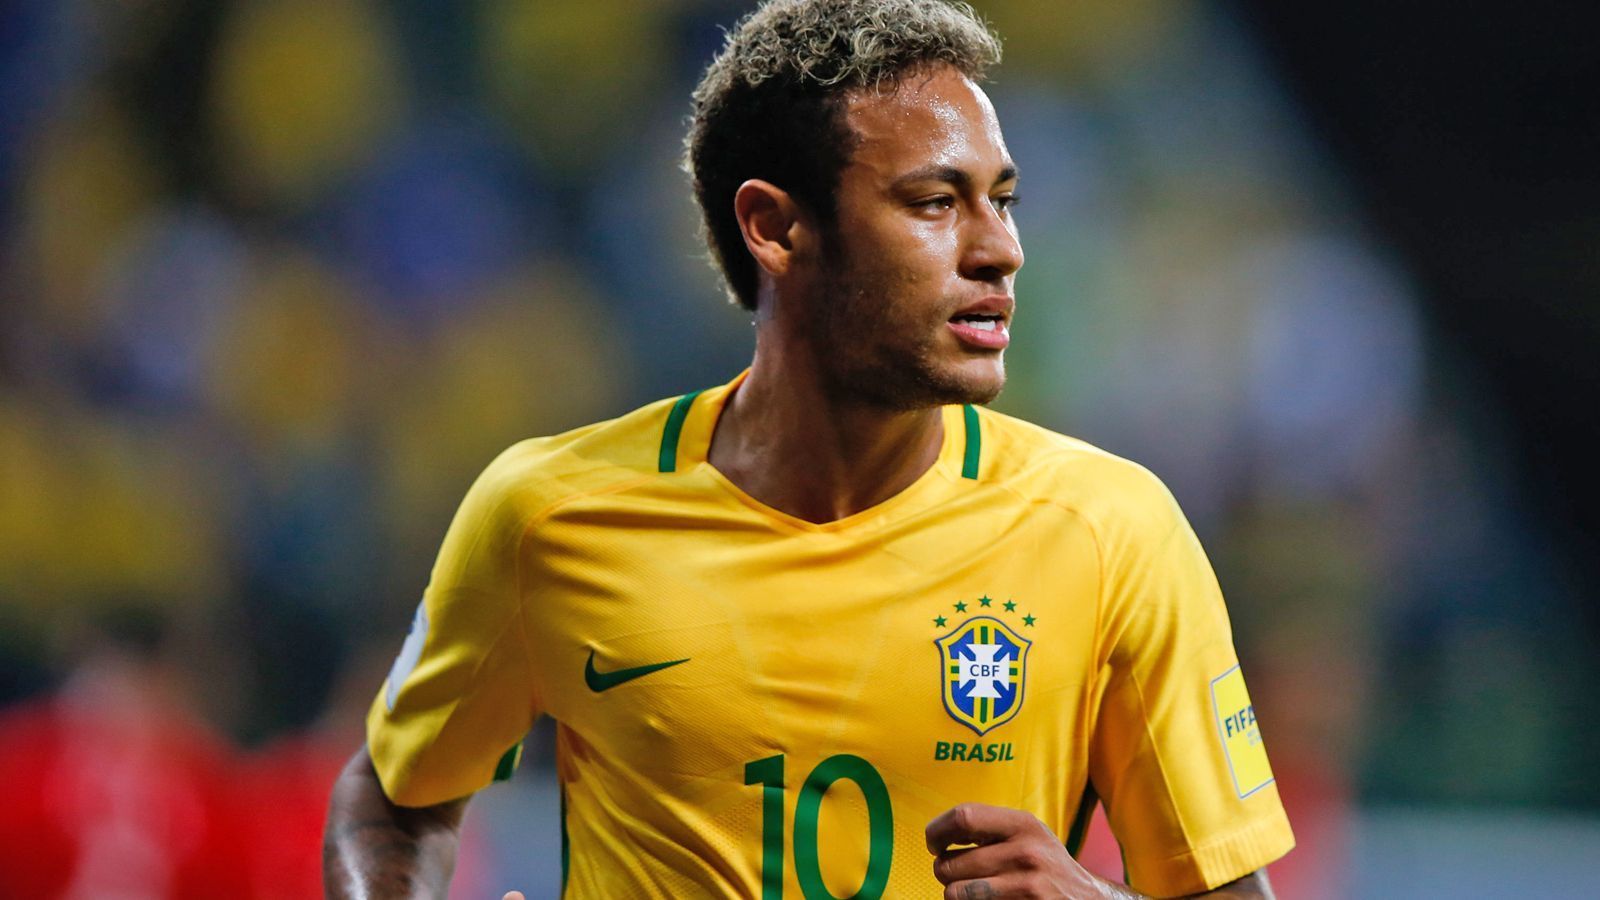 
                <strong>Platz 1: Neymar (Brasilien)</strong><br>
                Platz 1: Neymar (Brasilien) - 180 Millionen Euro
              